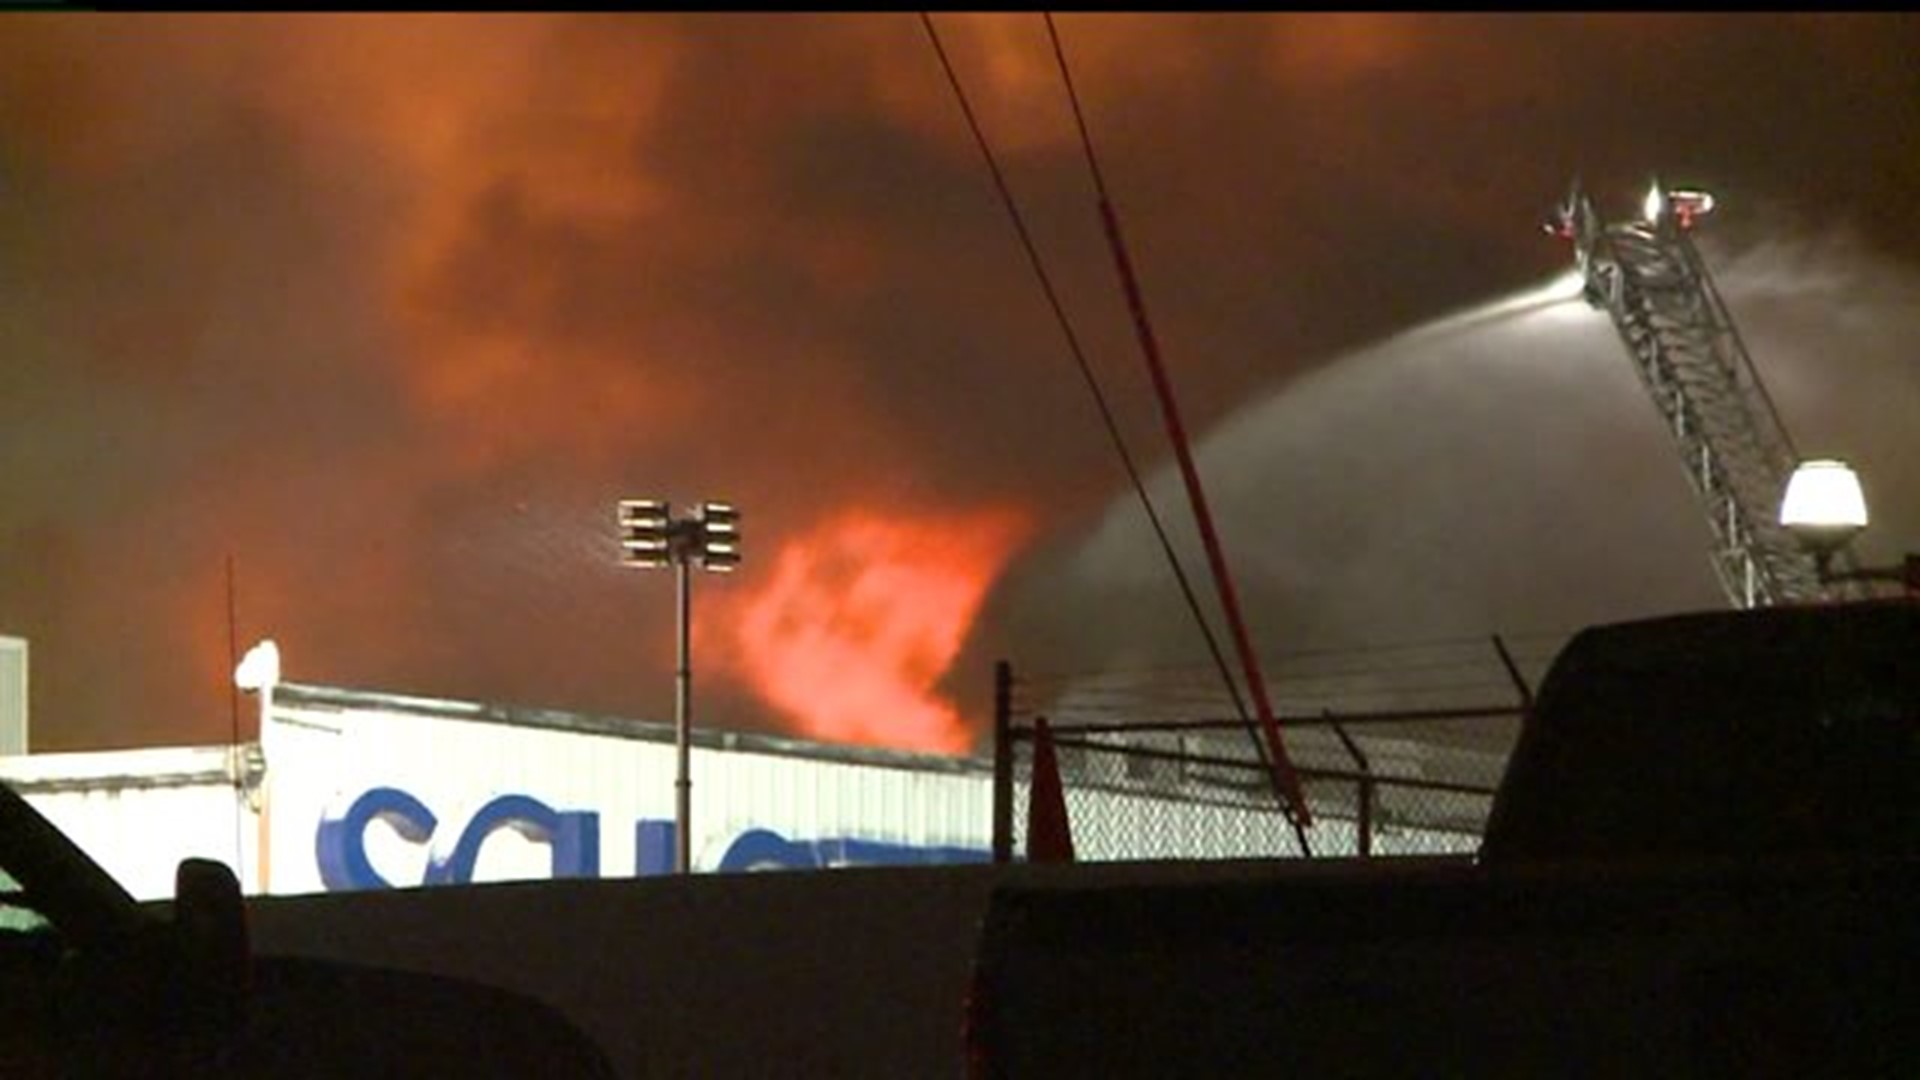 Update: Fire Hits Schott Glass Facility in Duryea